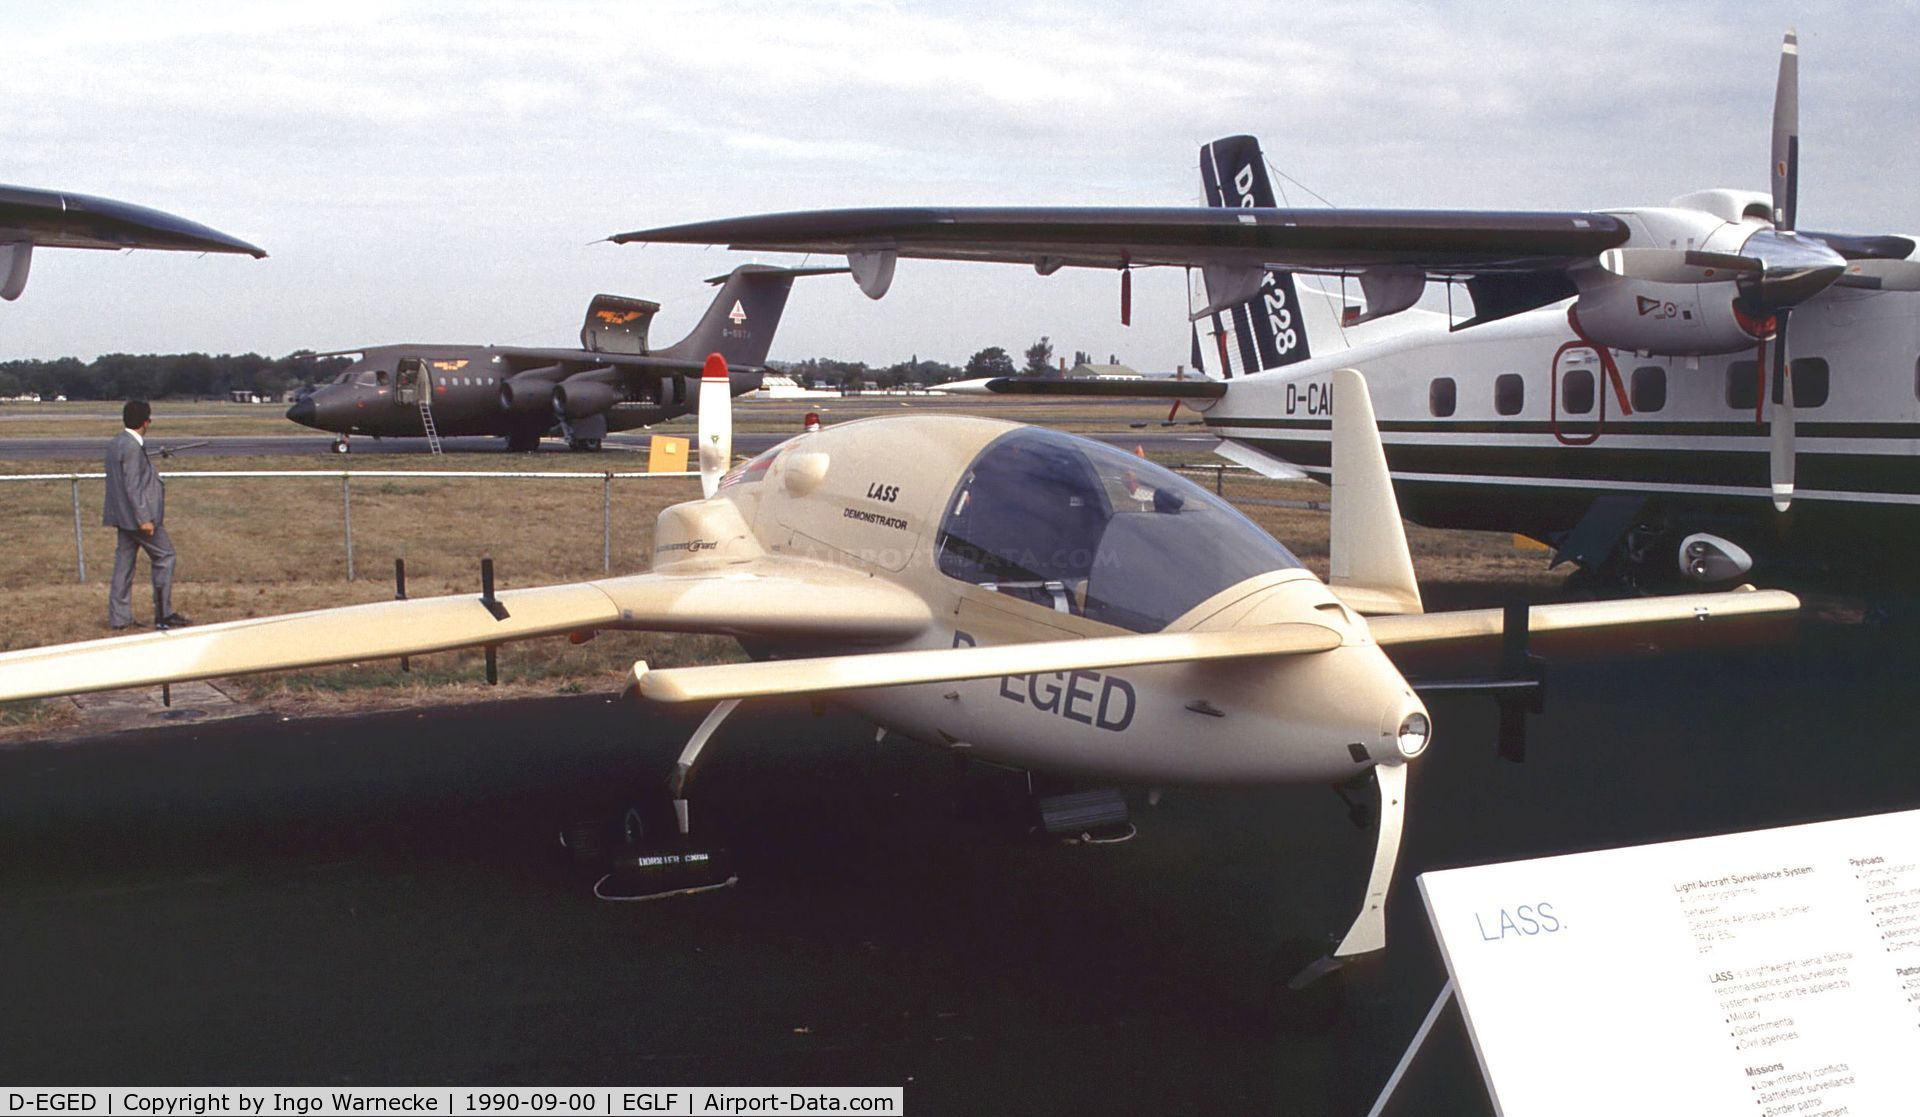 D-EGED, Gyroflug SC-01B-160 Speed Canard LASS (Light Aircraft Surveillance System C/N S-44, Gyroflug SC-01B-160 Speed Canard LASS (Light Aircraft Surveillance System) at Farnborough International 1990